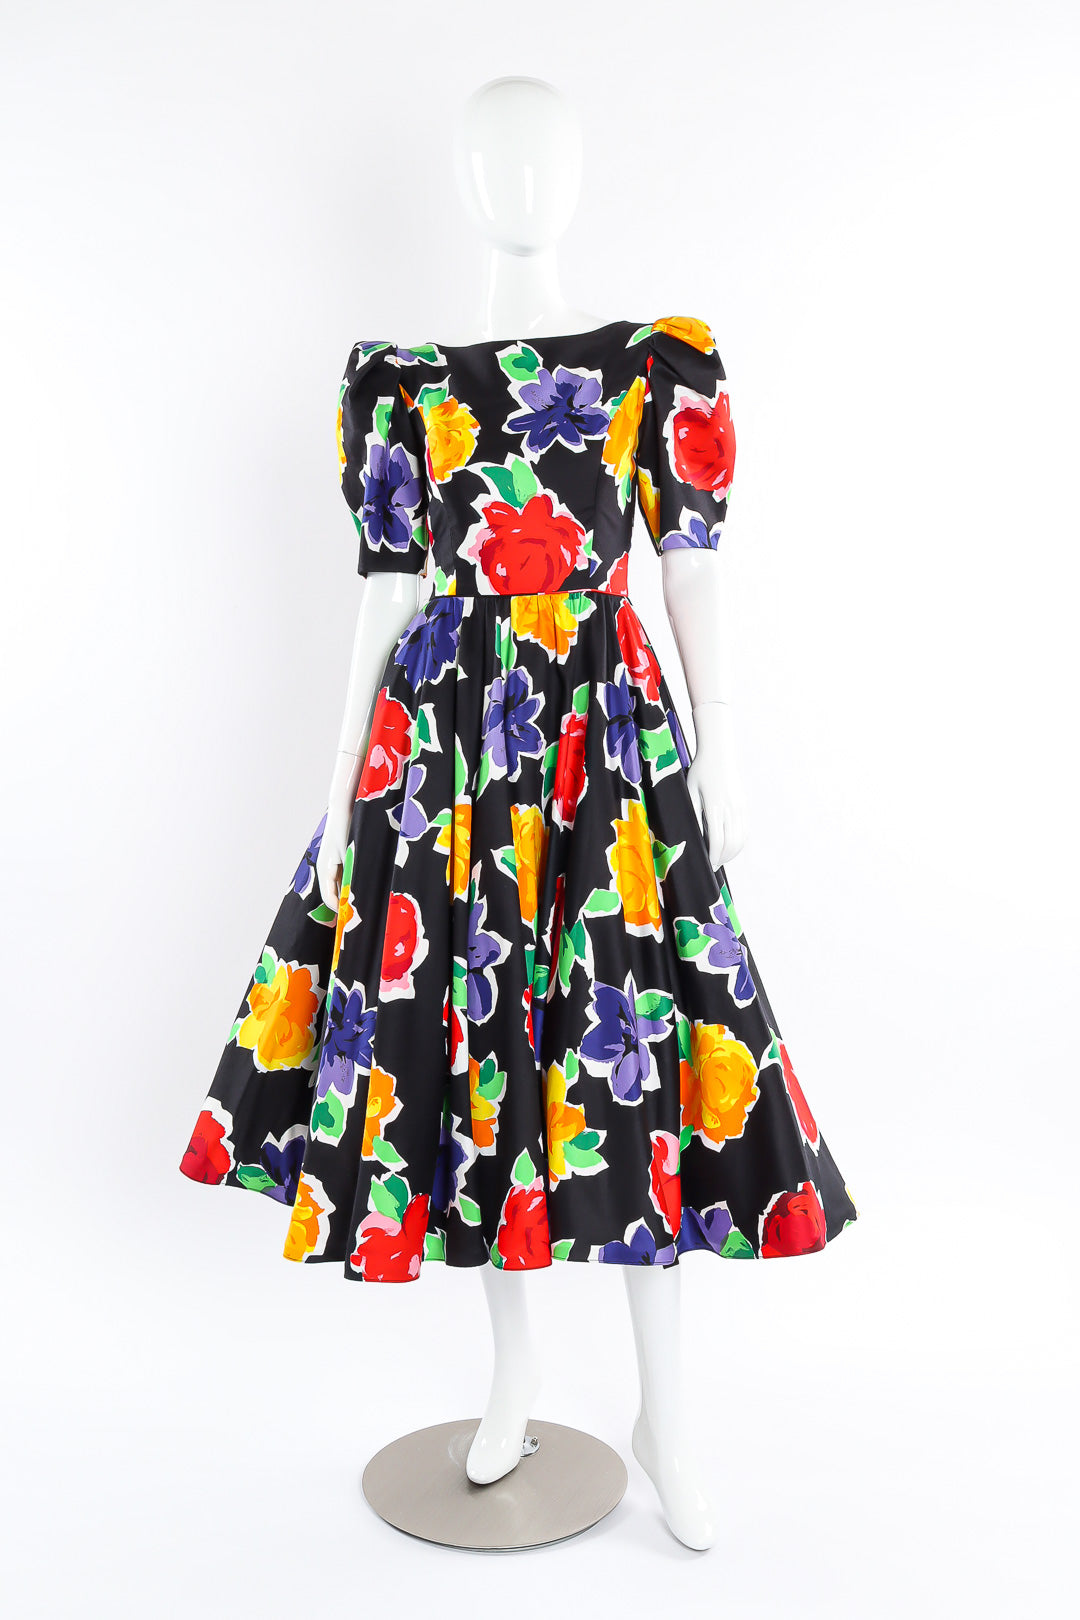 Petticoat dress by Victor Costa mannequin front @recessla